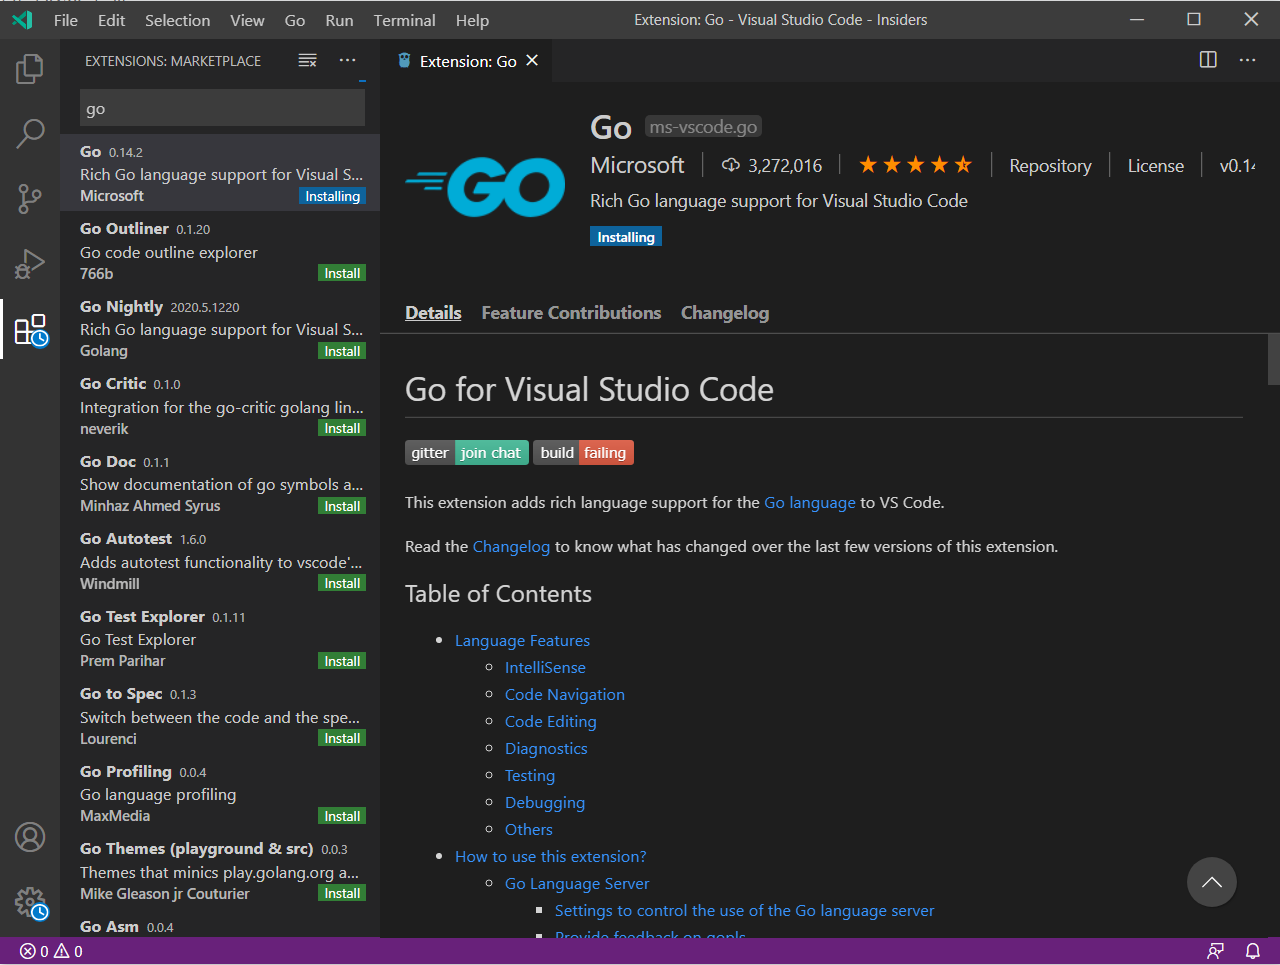 Go for Visual Studio Code